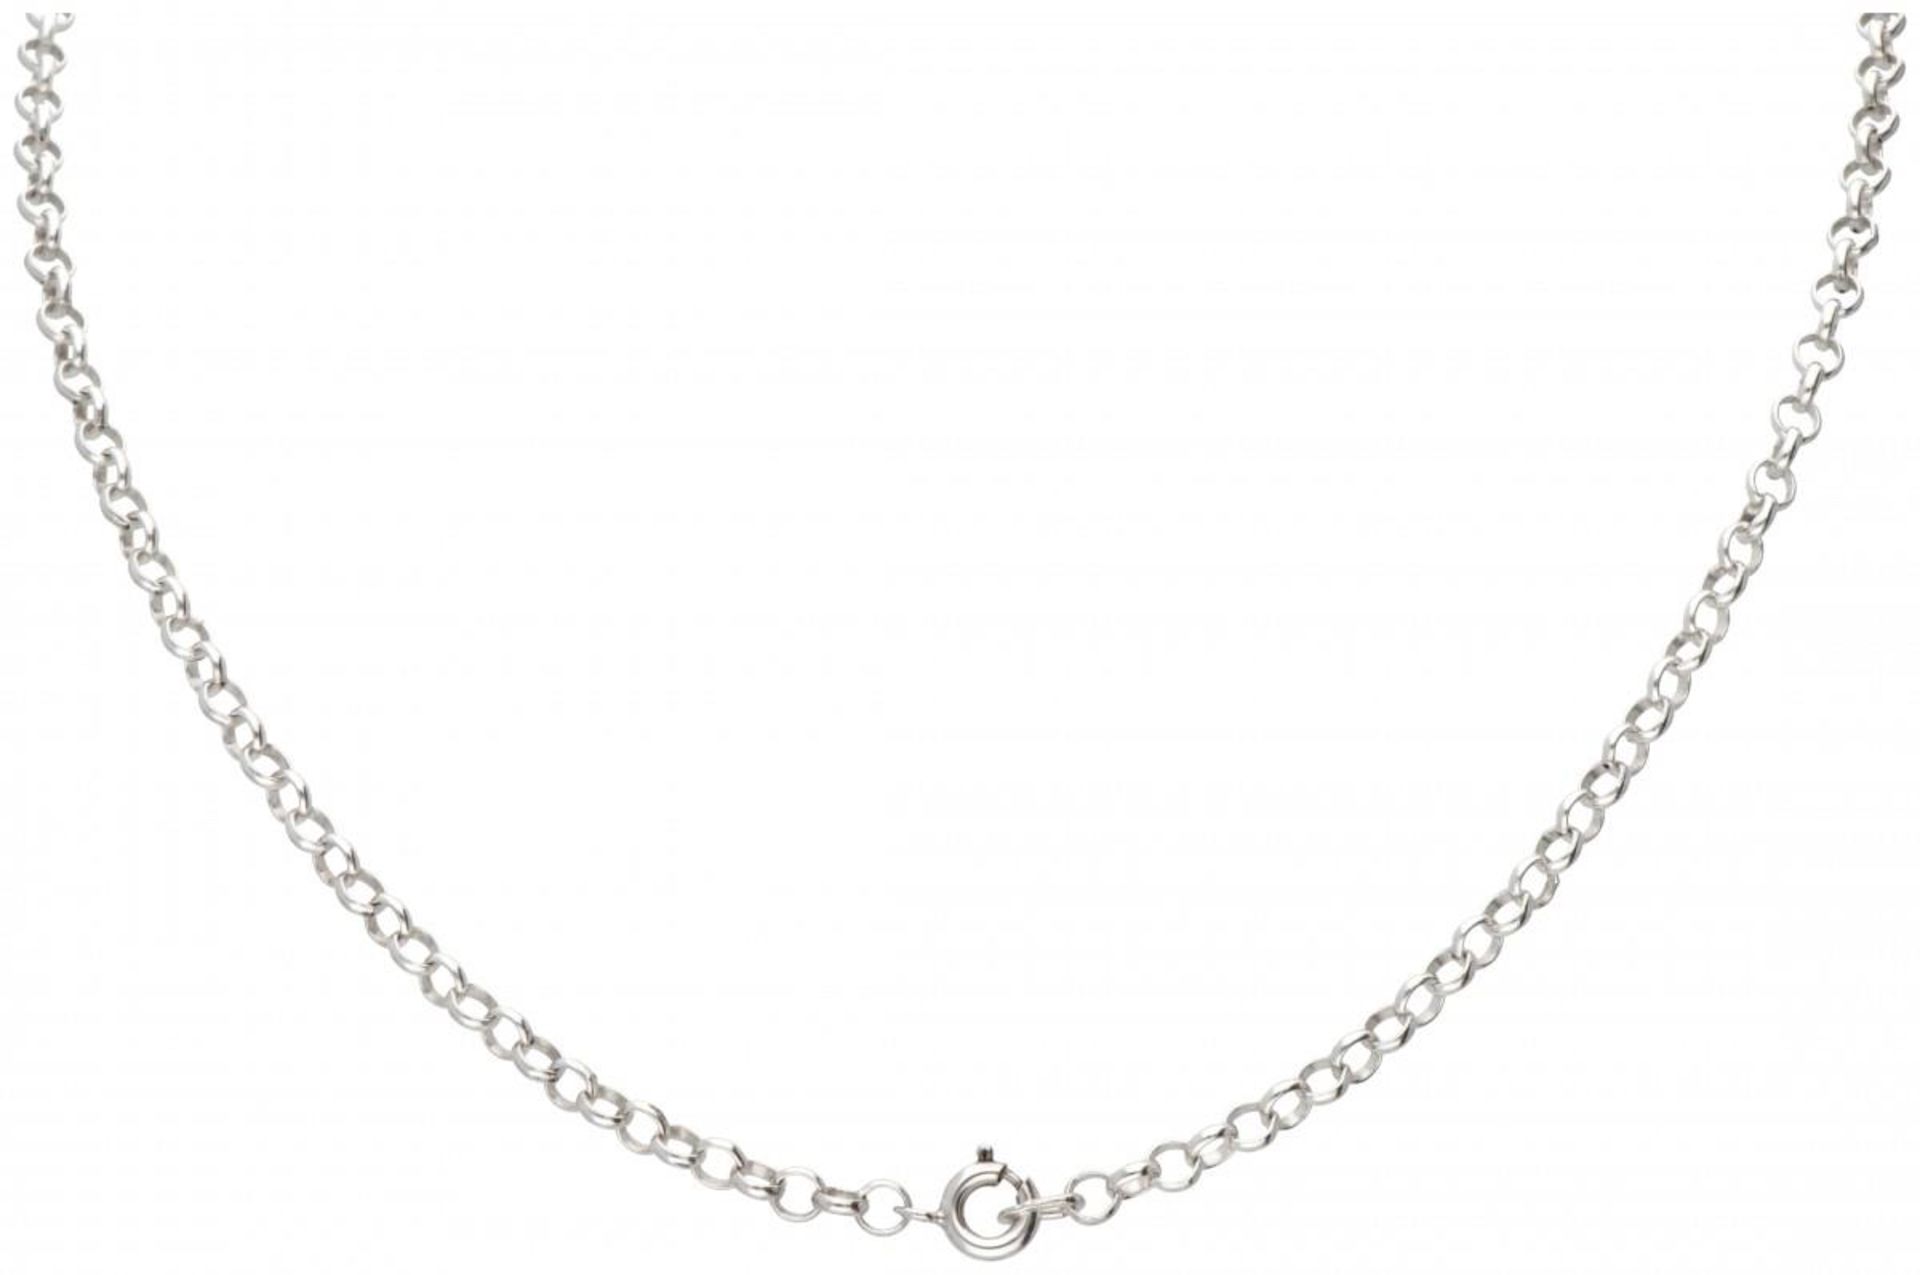 Silver necklace with a tiger eye pendant by Finnish designer Kupittaan Kulta. - Bild 3 aus 3